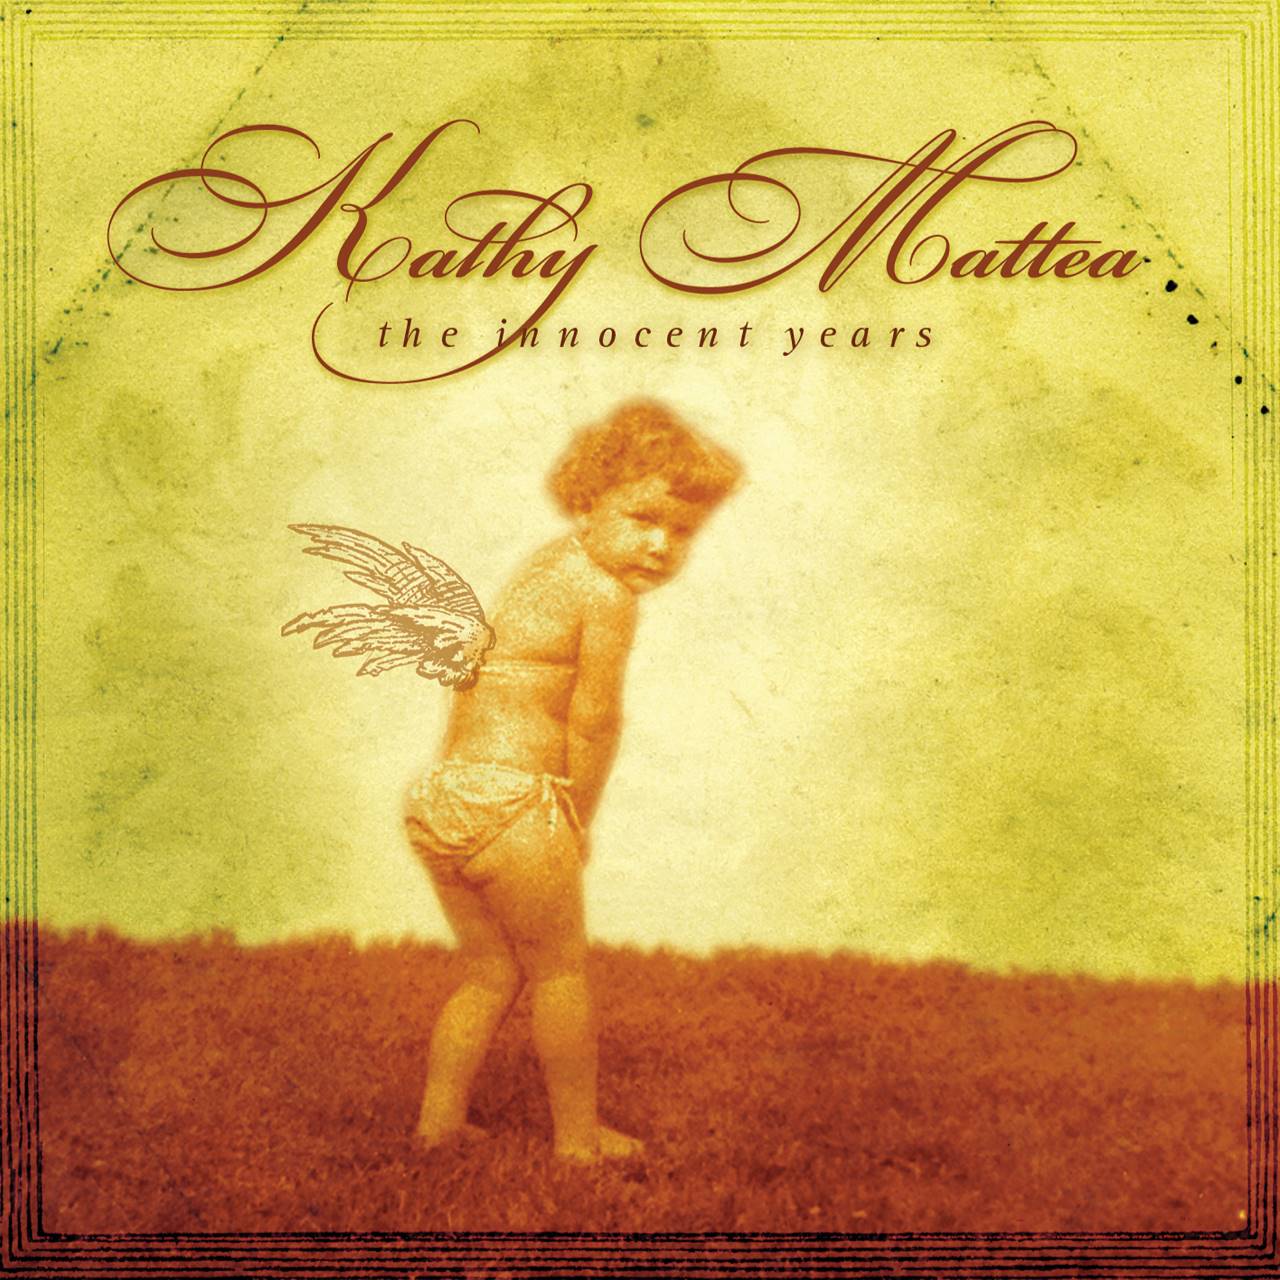 Kathy Mattea - The Innocent Years cover album